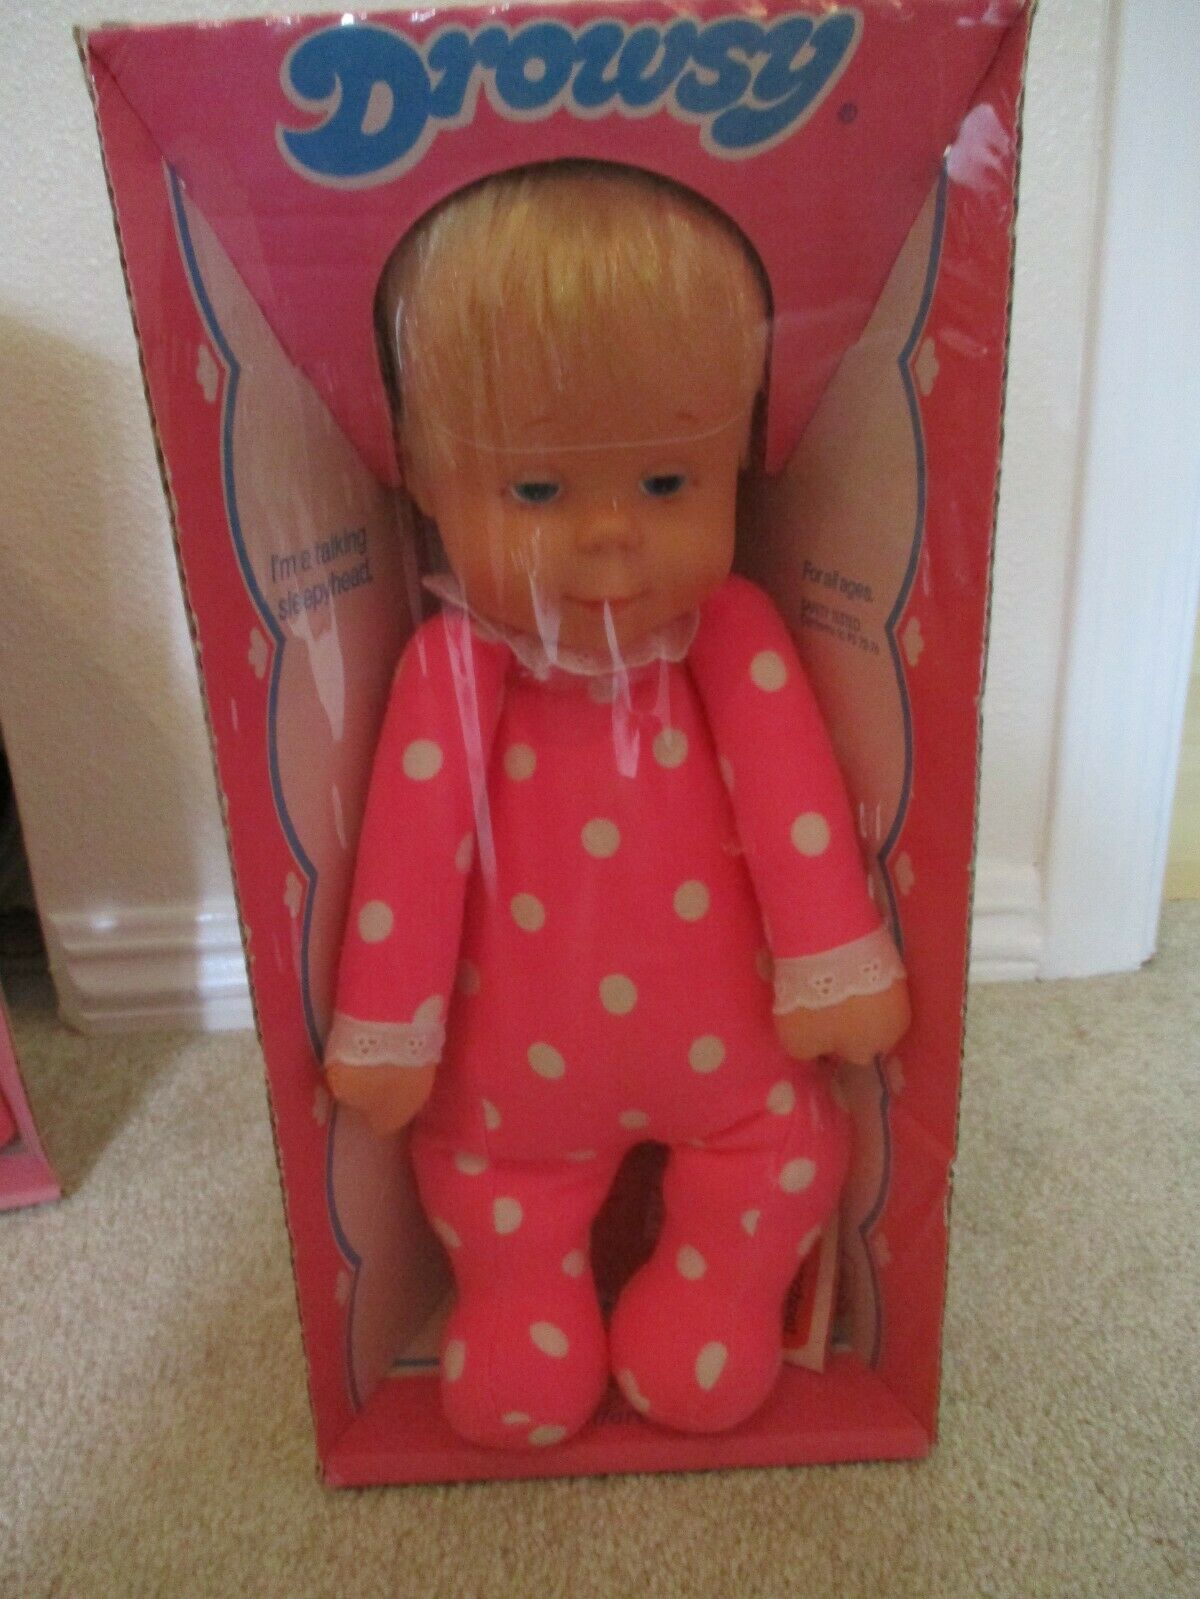 New In Original Sealed Box! Vintage Doll 1974 Mattel Talking Drowsy!